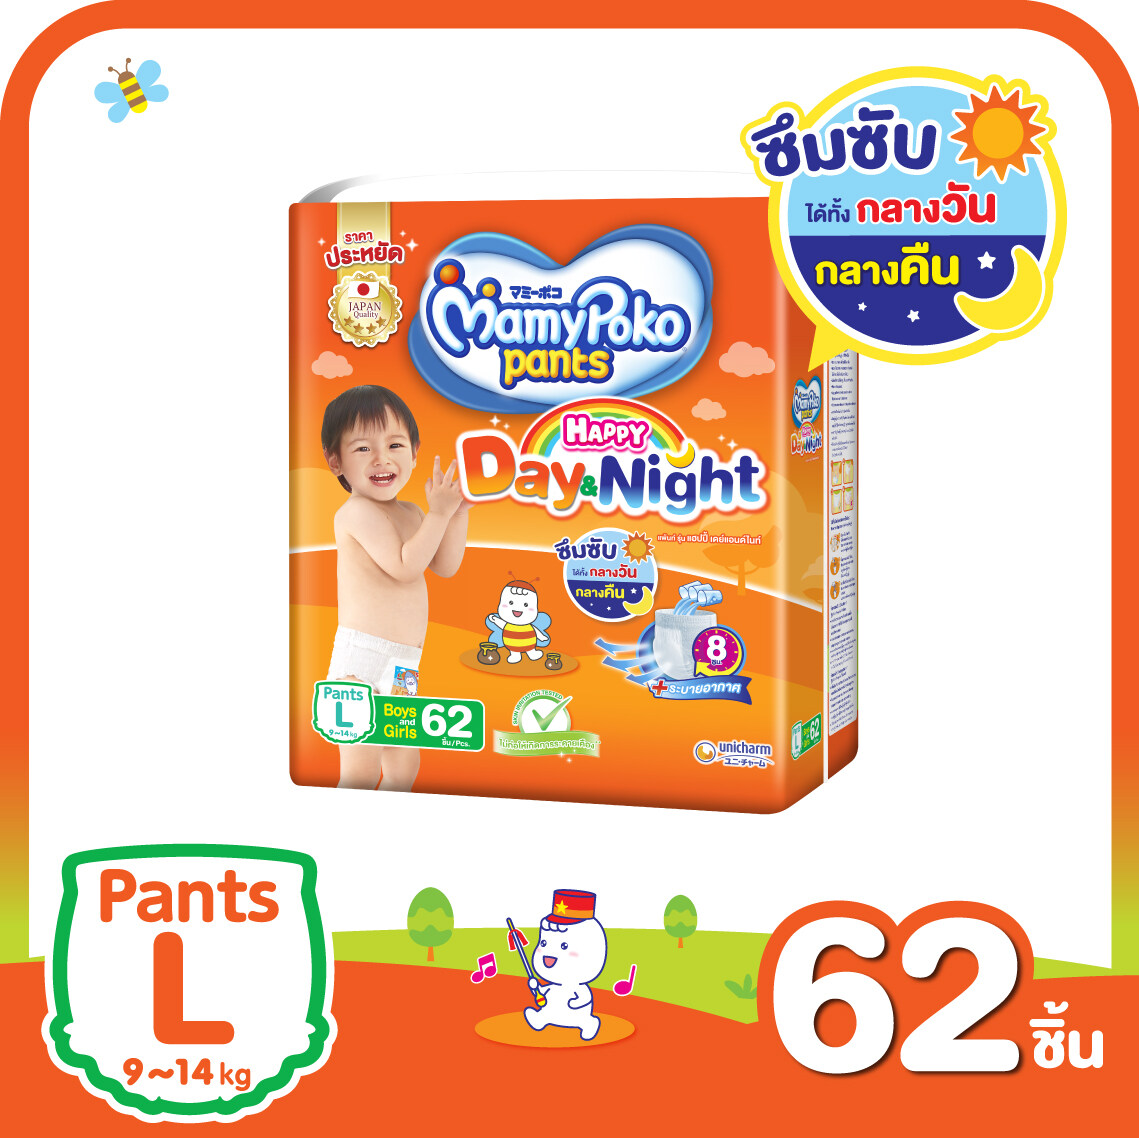 MamyPoko Pants Happy Day&Night ผ้าอ้อมเด็กแบบกางเกง มามี่โพโค แพ้นท์ แฮปปี้เดย์แอนด์ไนท์ ไซส์ L 62 ชิ้น